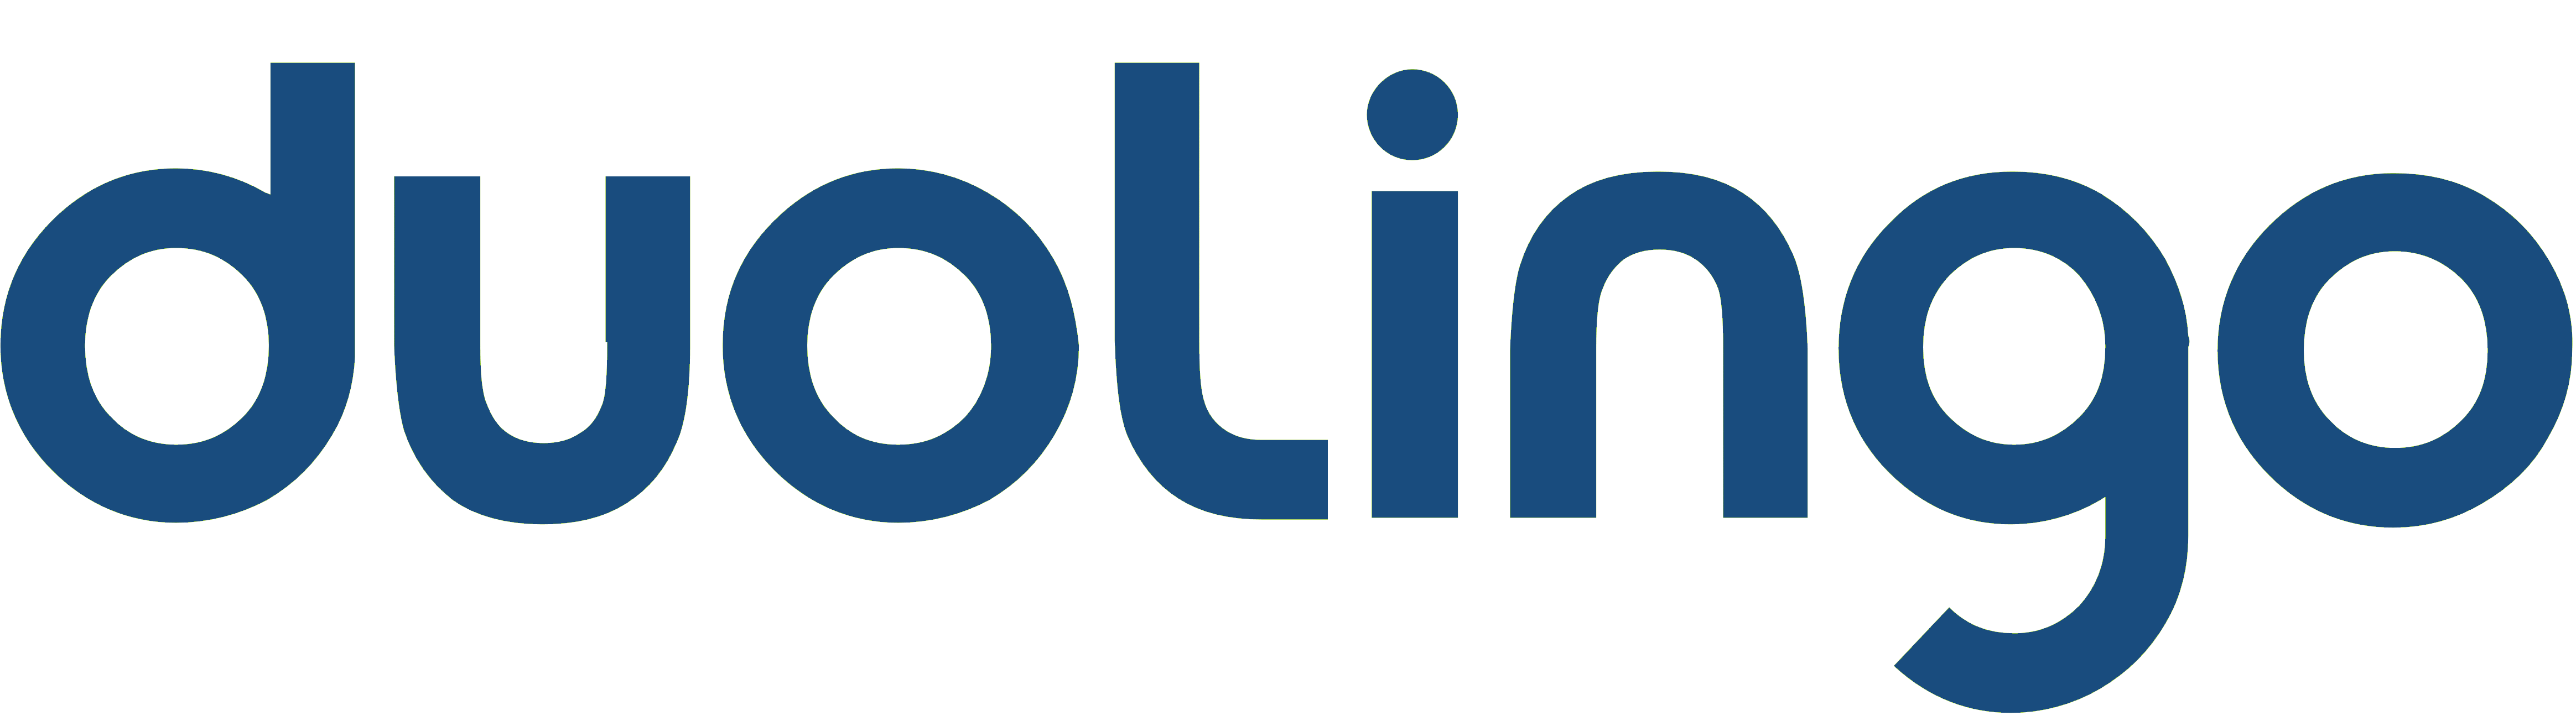 Duolingo Logos Download